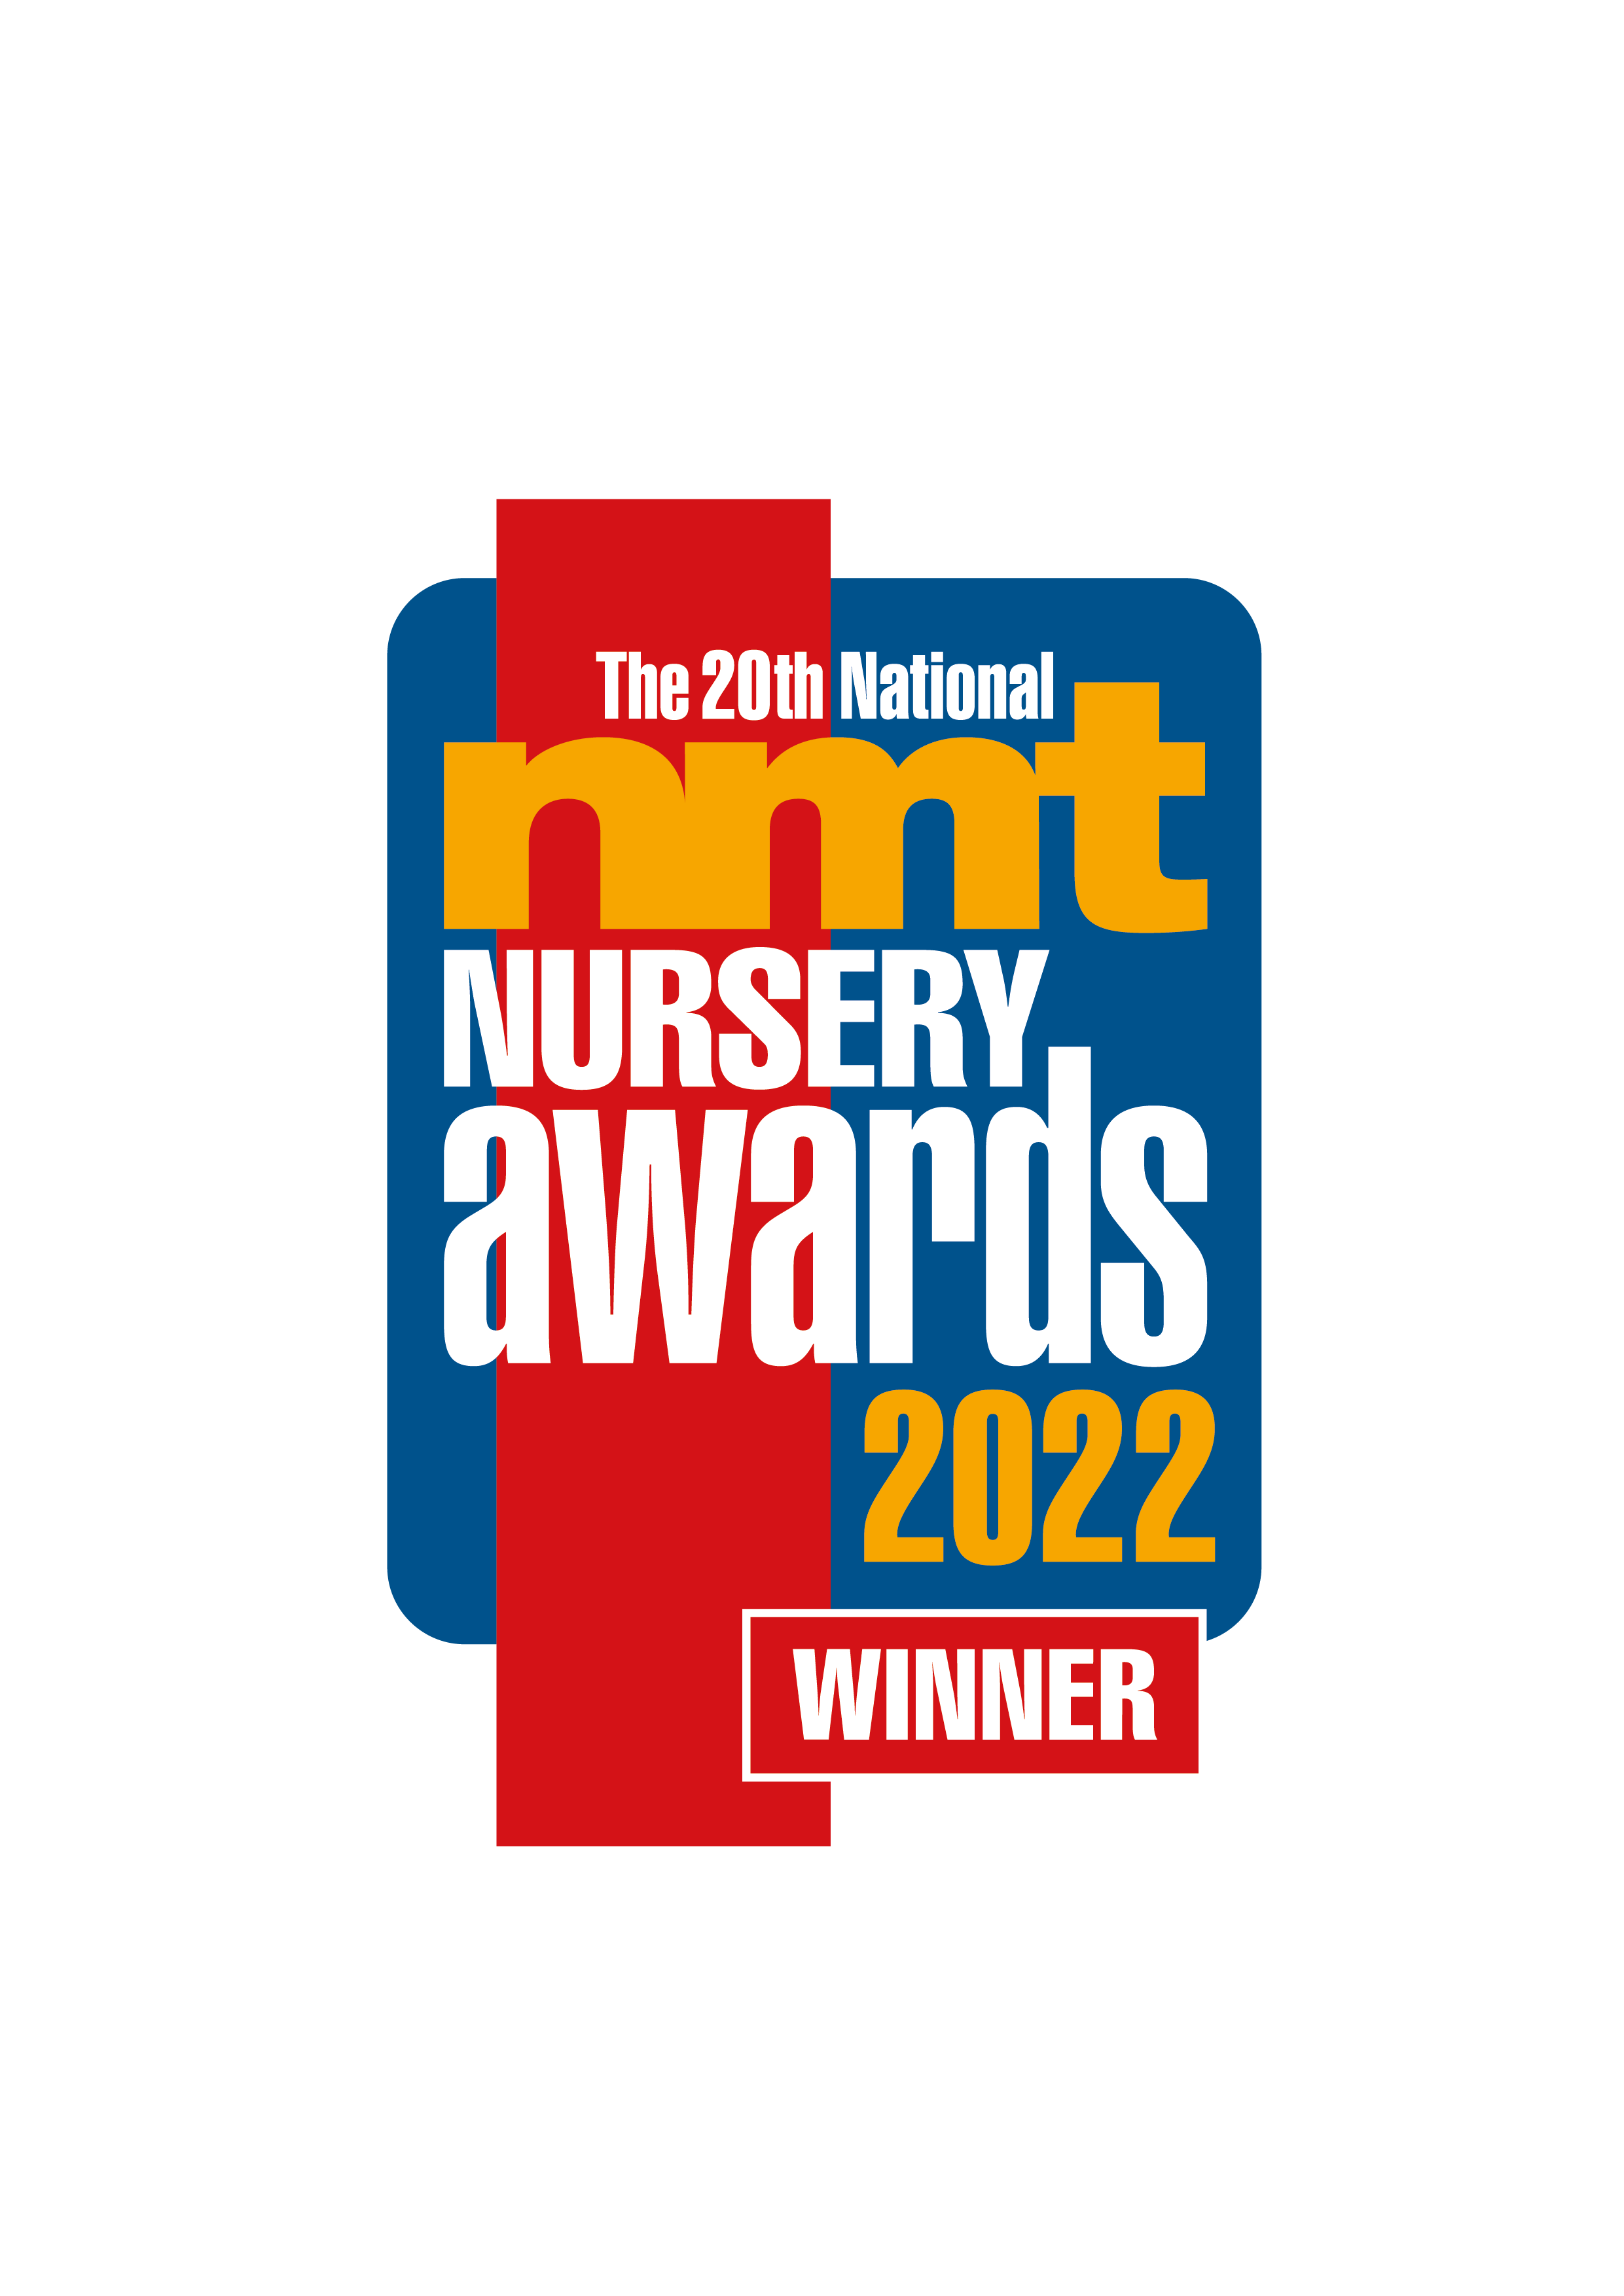 We are an Award Winning Nursery